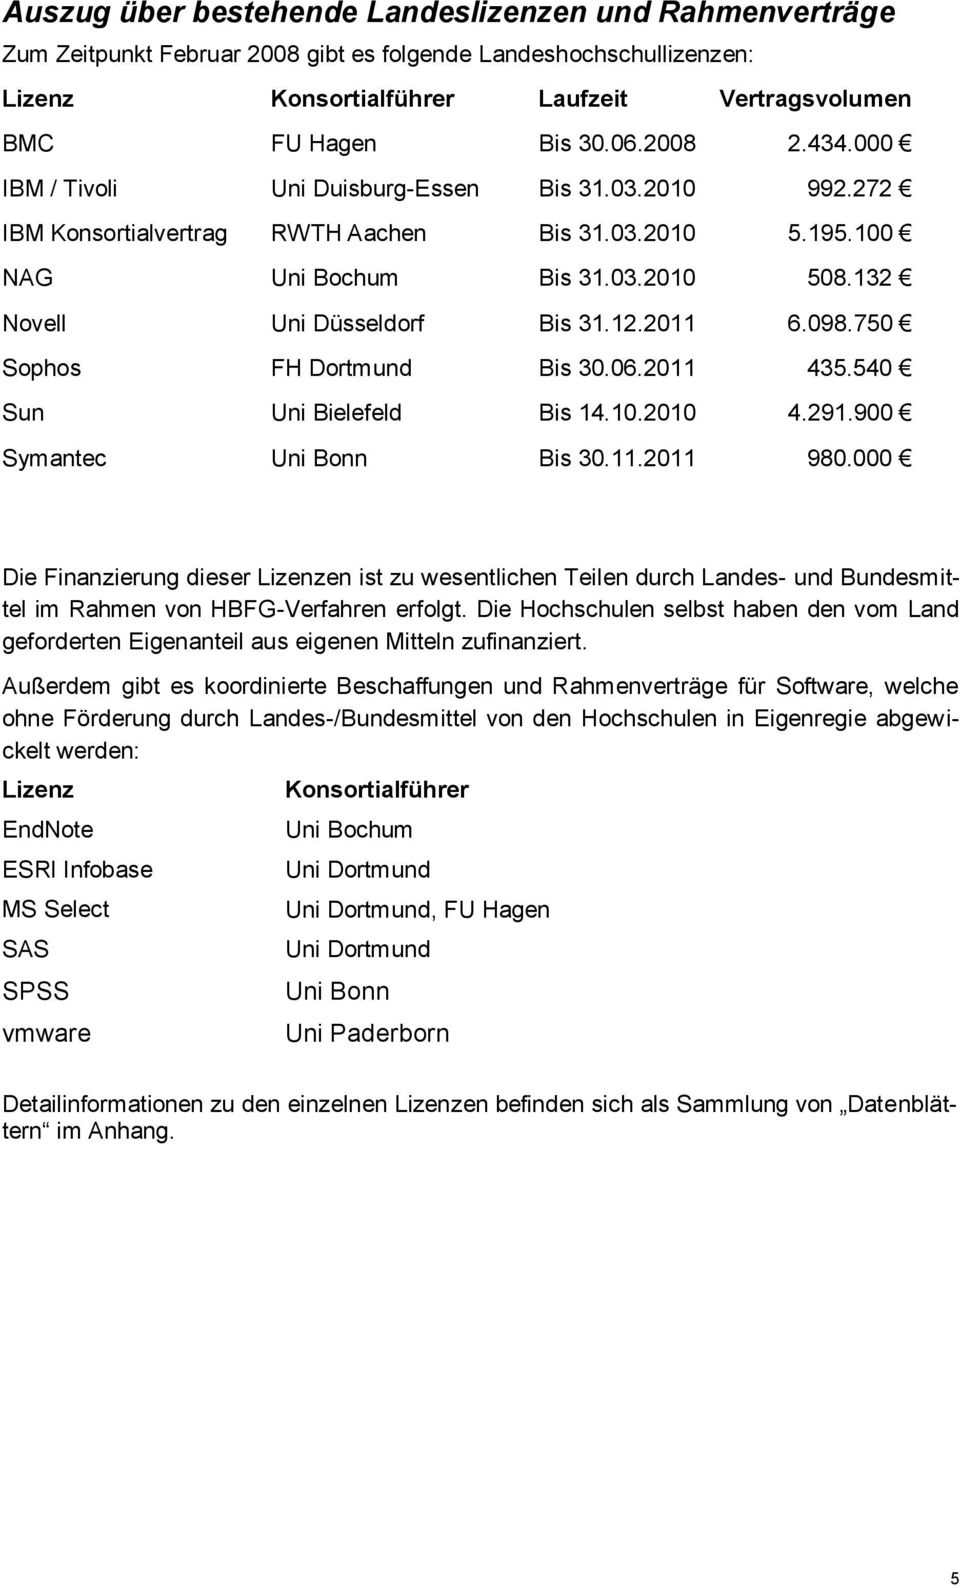 750 Sophos FH Dortmund Bis 30.06.2011 435.540 Sun Uni Bielefeld Bis 14.10.2010 4.291.900 Symantec Uni Bonn Bis 30.11.2011 980.